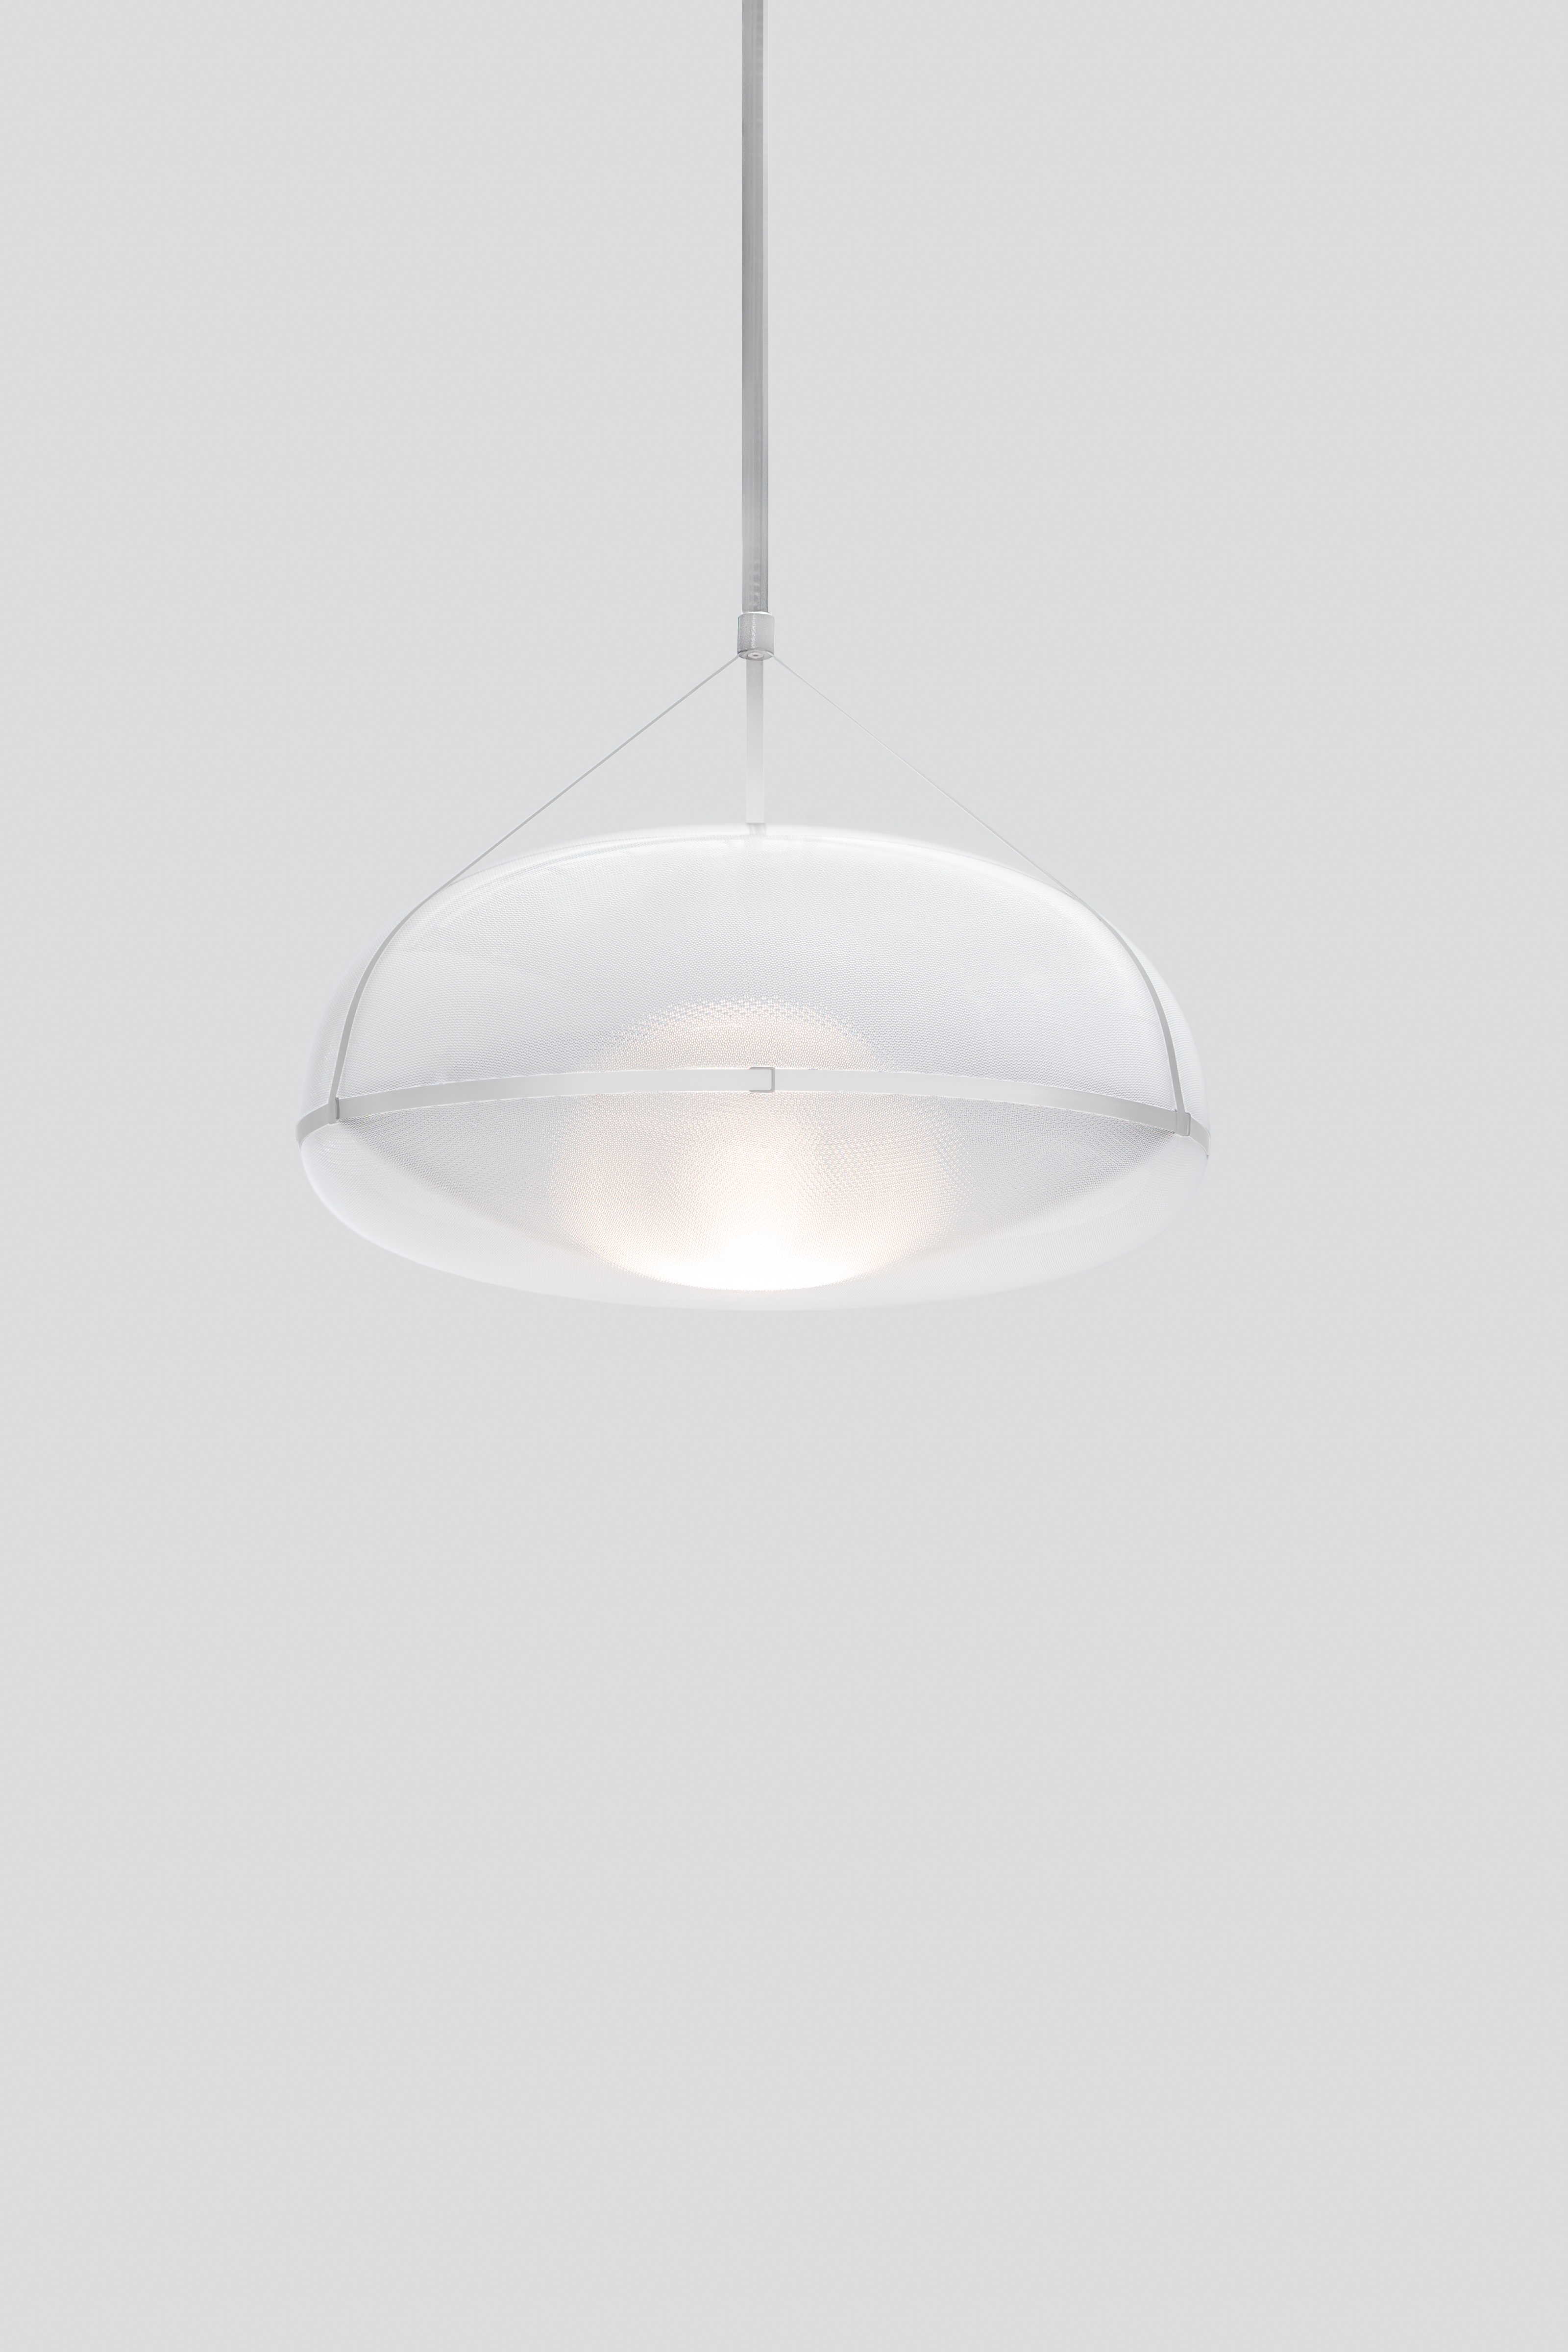 IRIS PENDANT - A-N-D decorative luminaire design studio and 